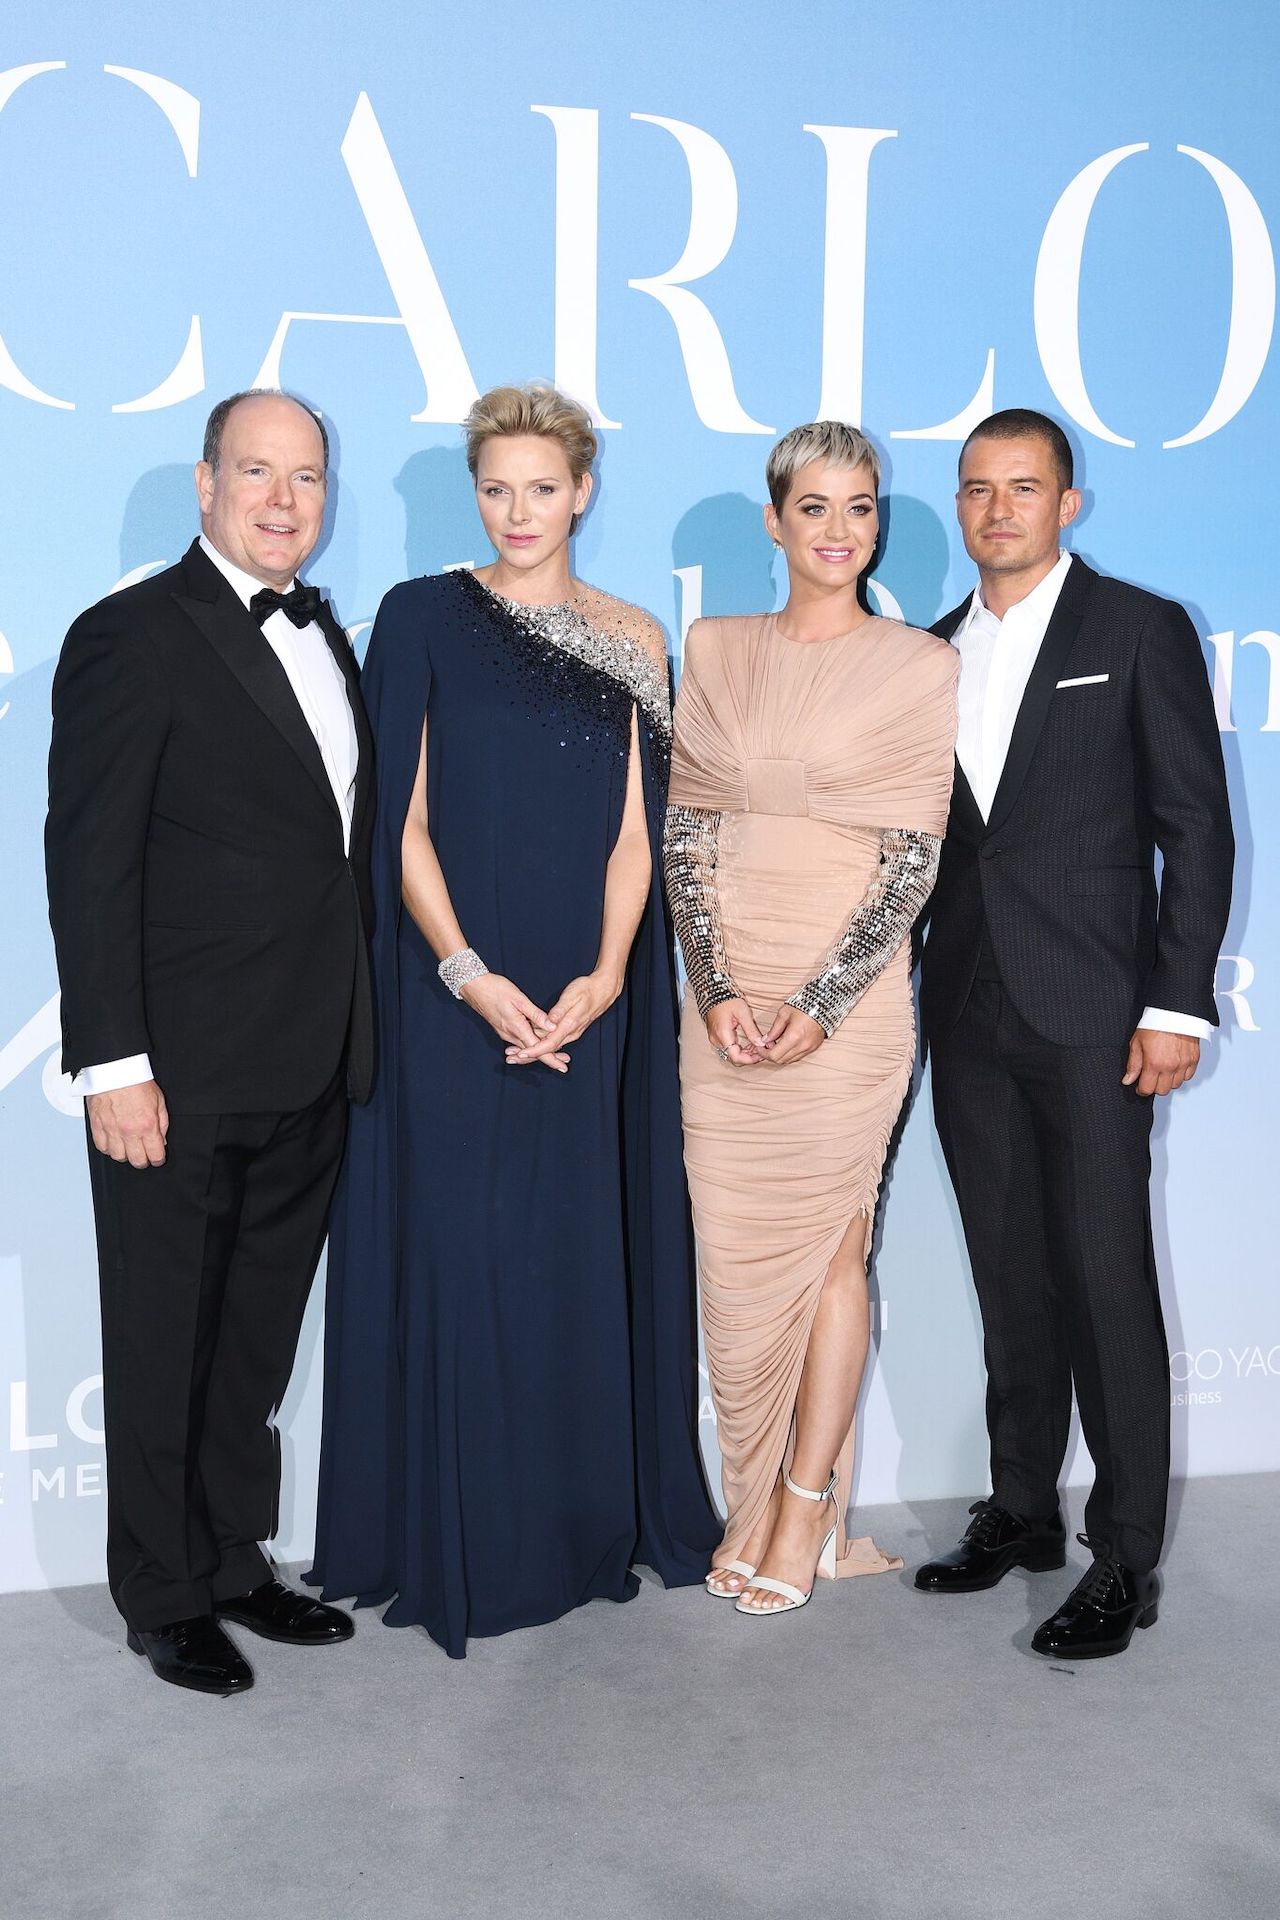 Charlene of Monaco, Albert II of Monaco, Katy Perry, and Orlando Bloom at the event